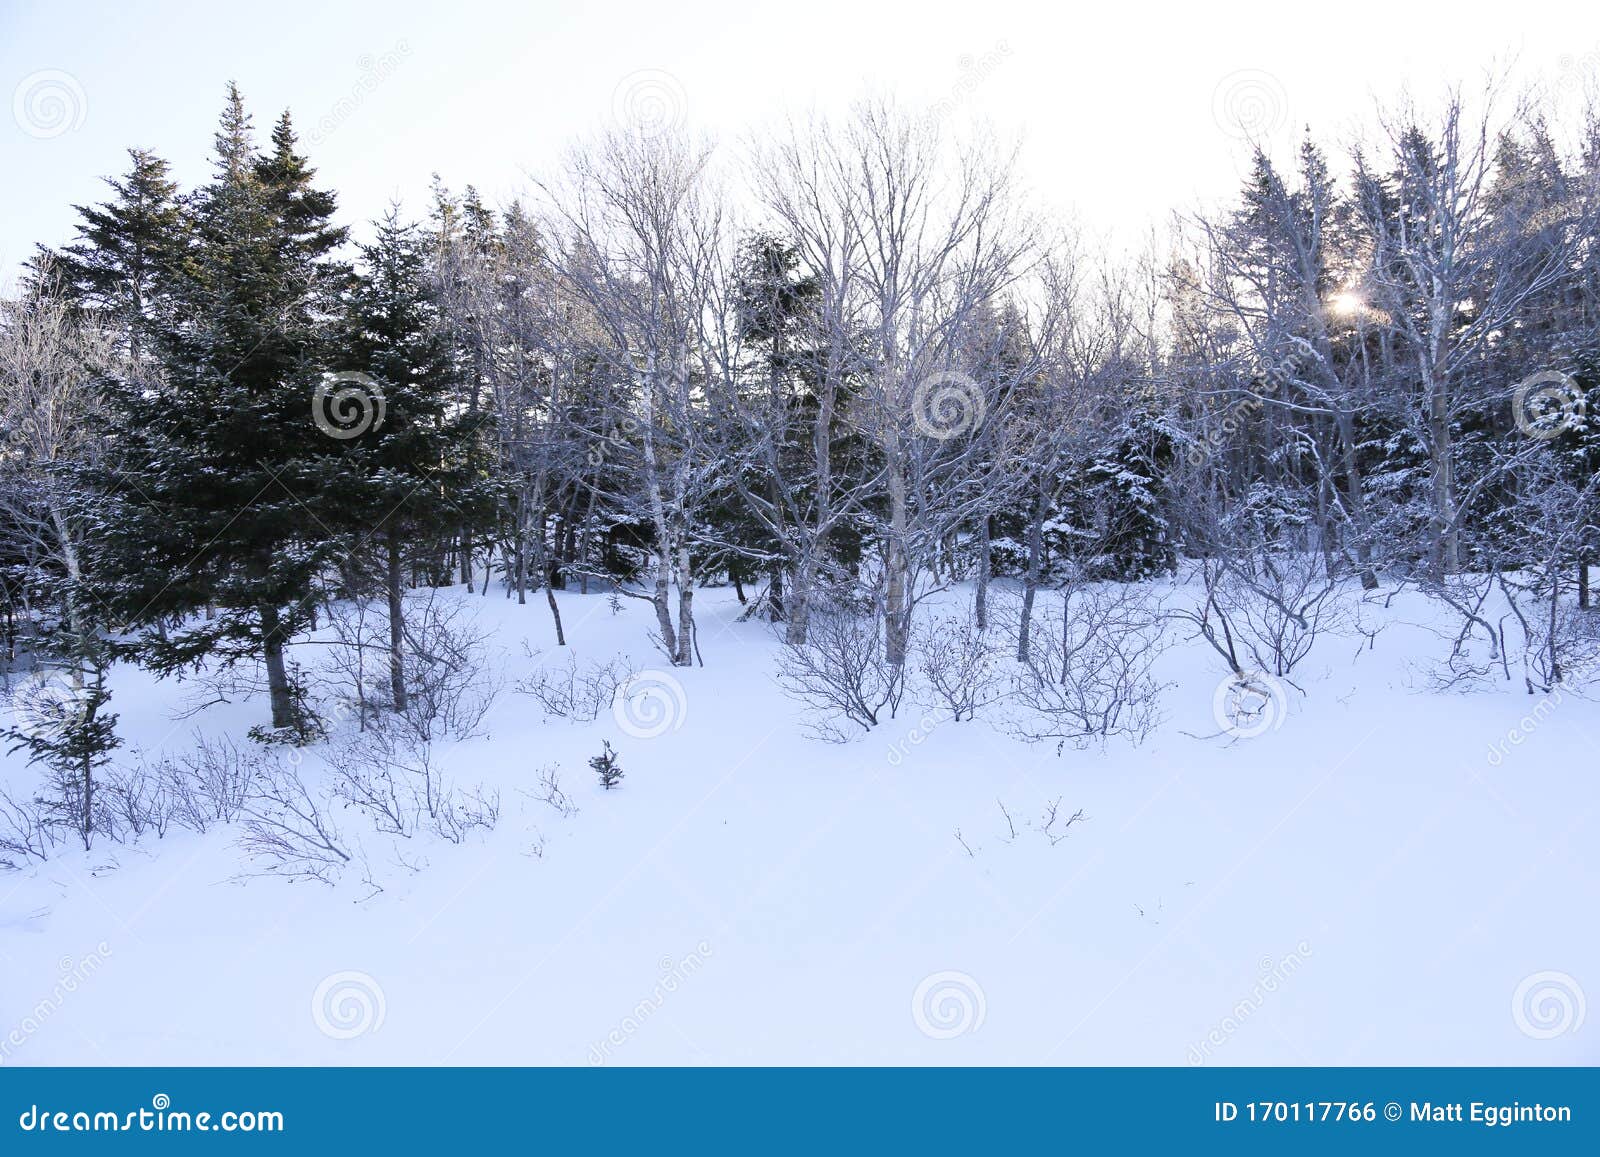 winter woodlands